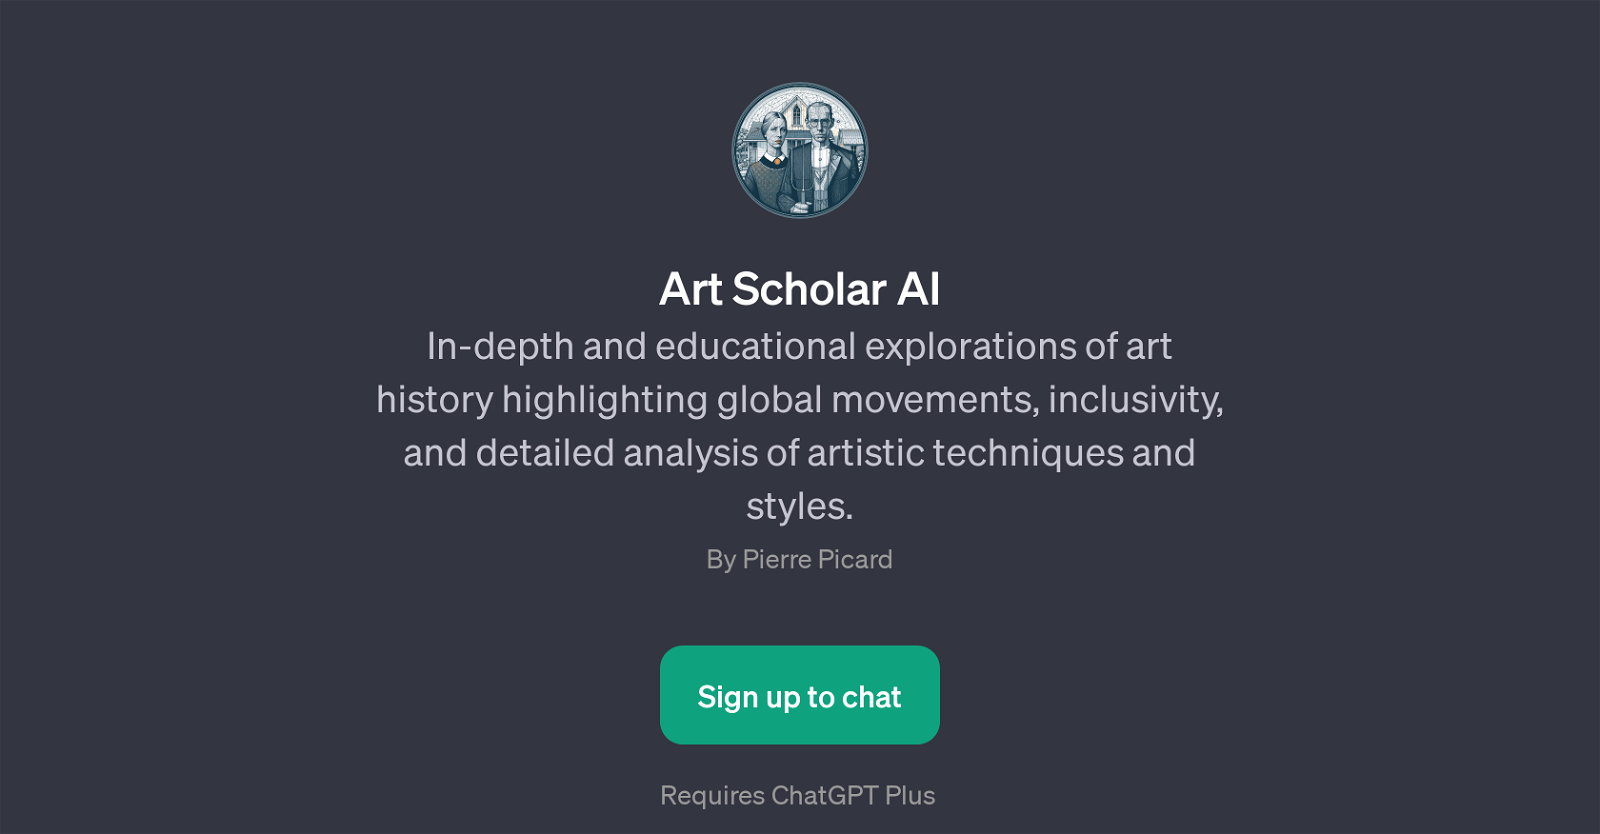 Art Scholar AI website